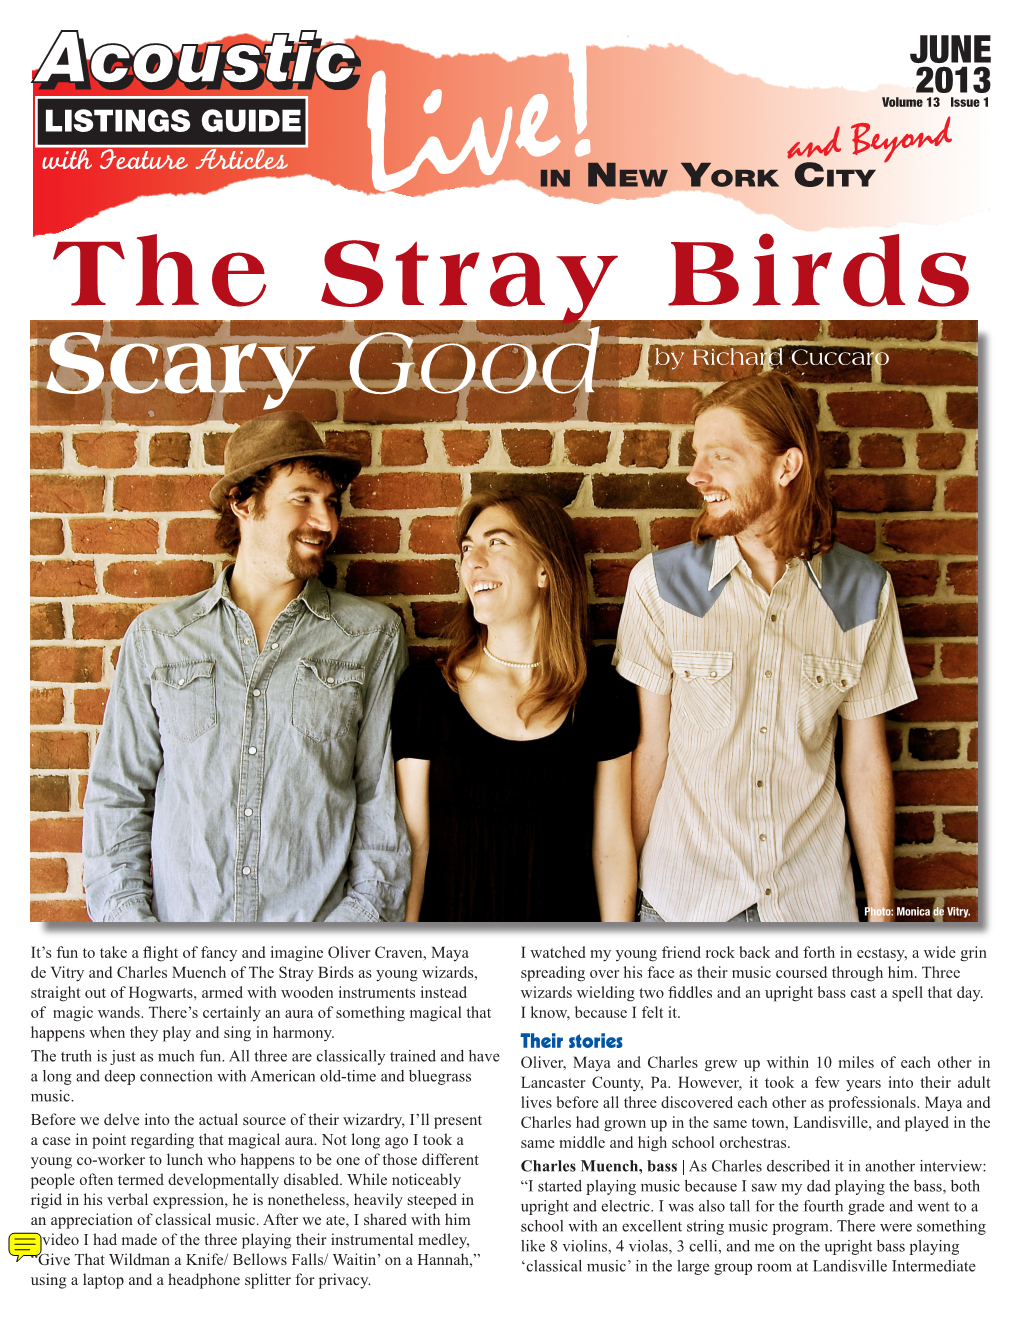 The Stray Birds Scary Good by Richard Cuccaro